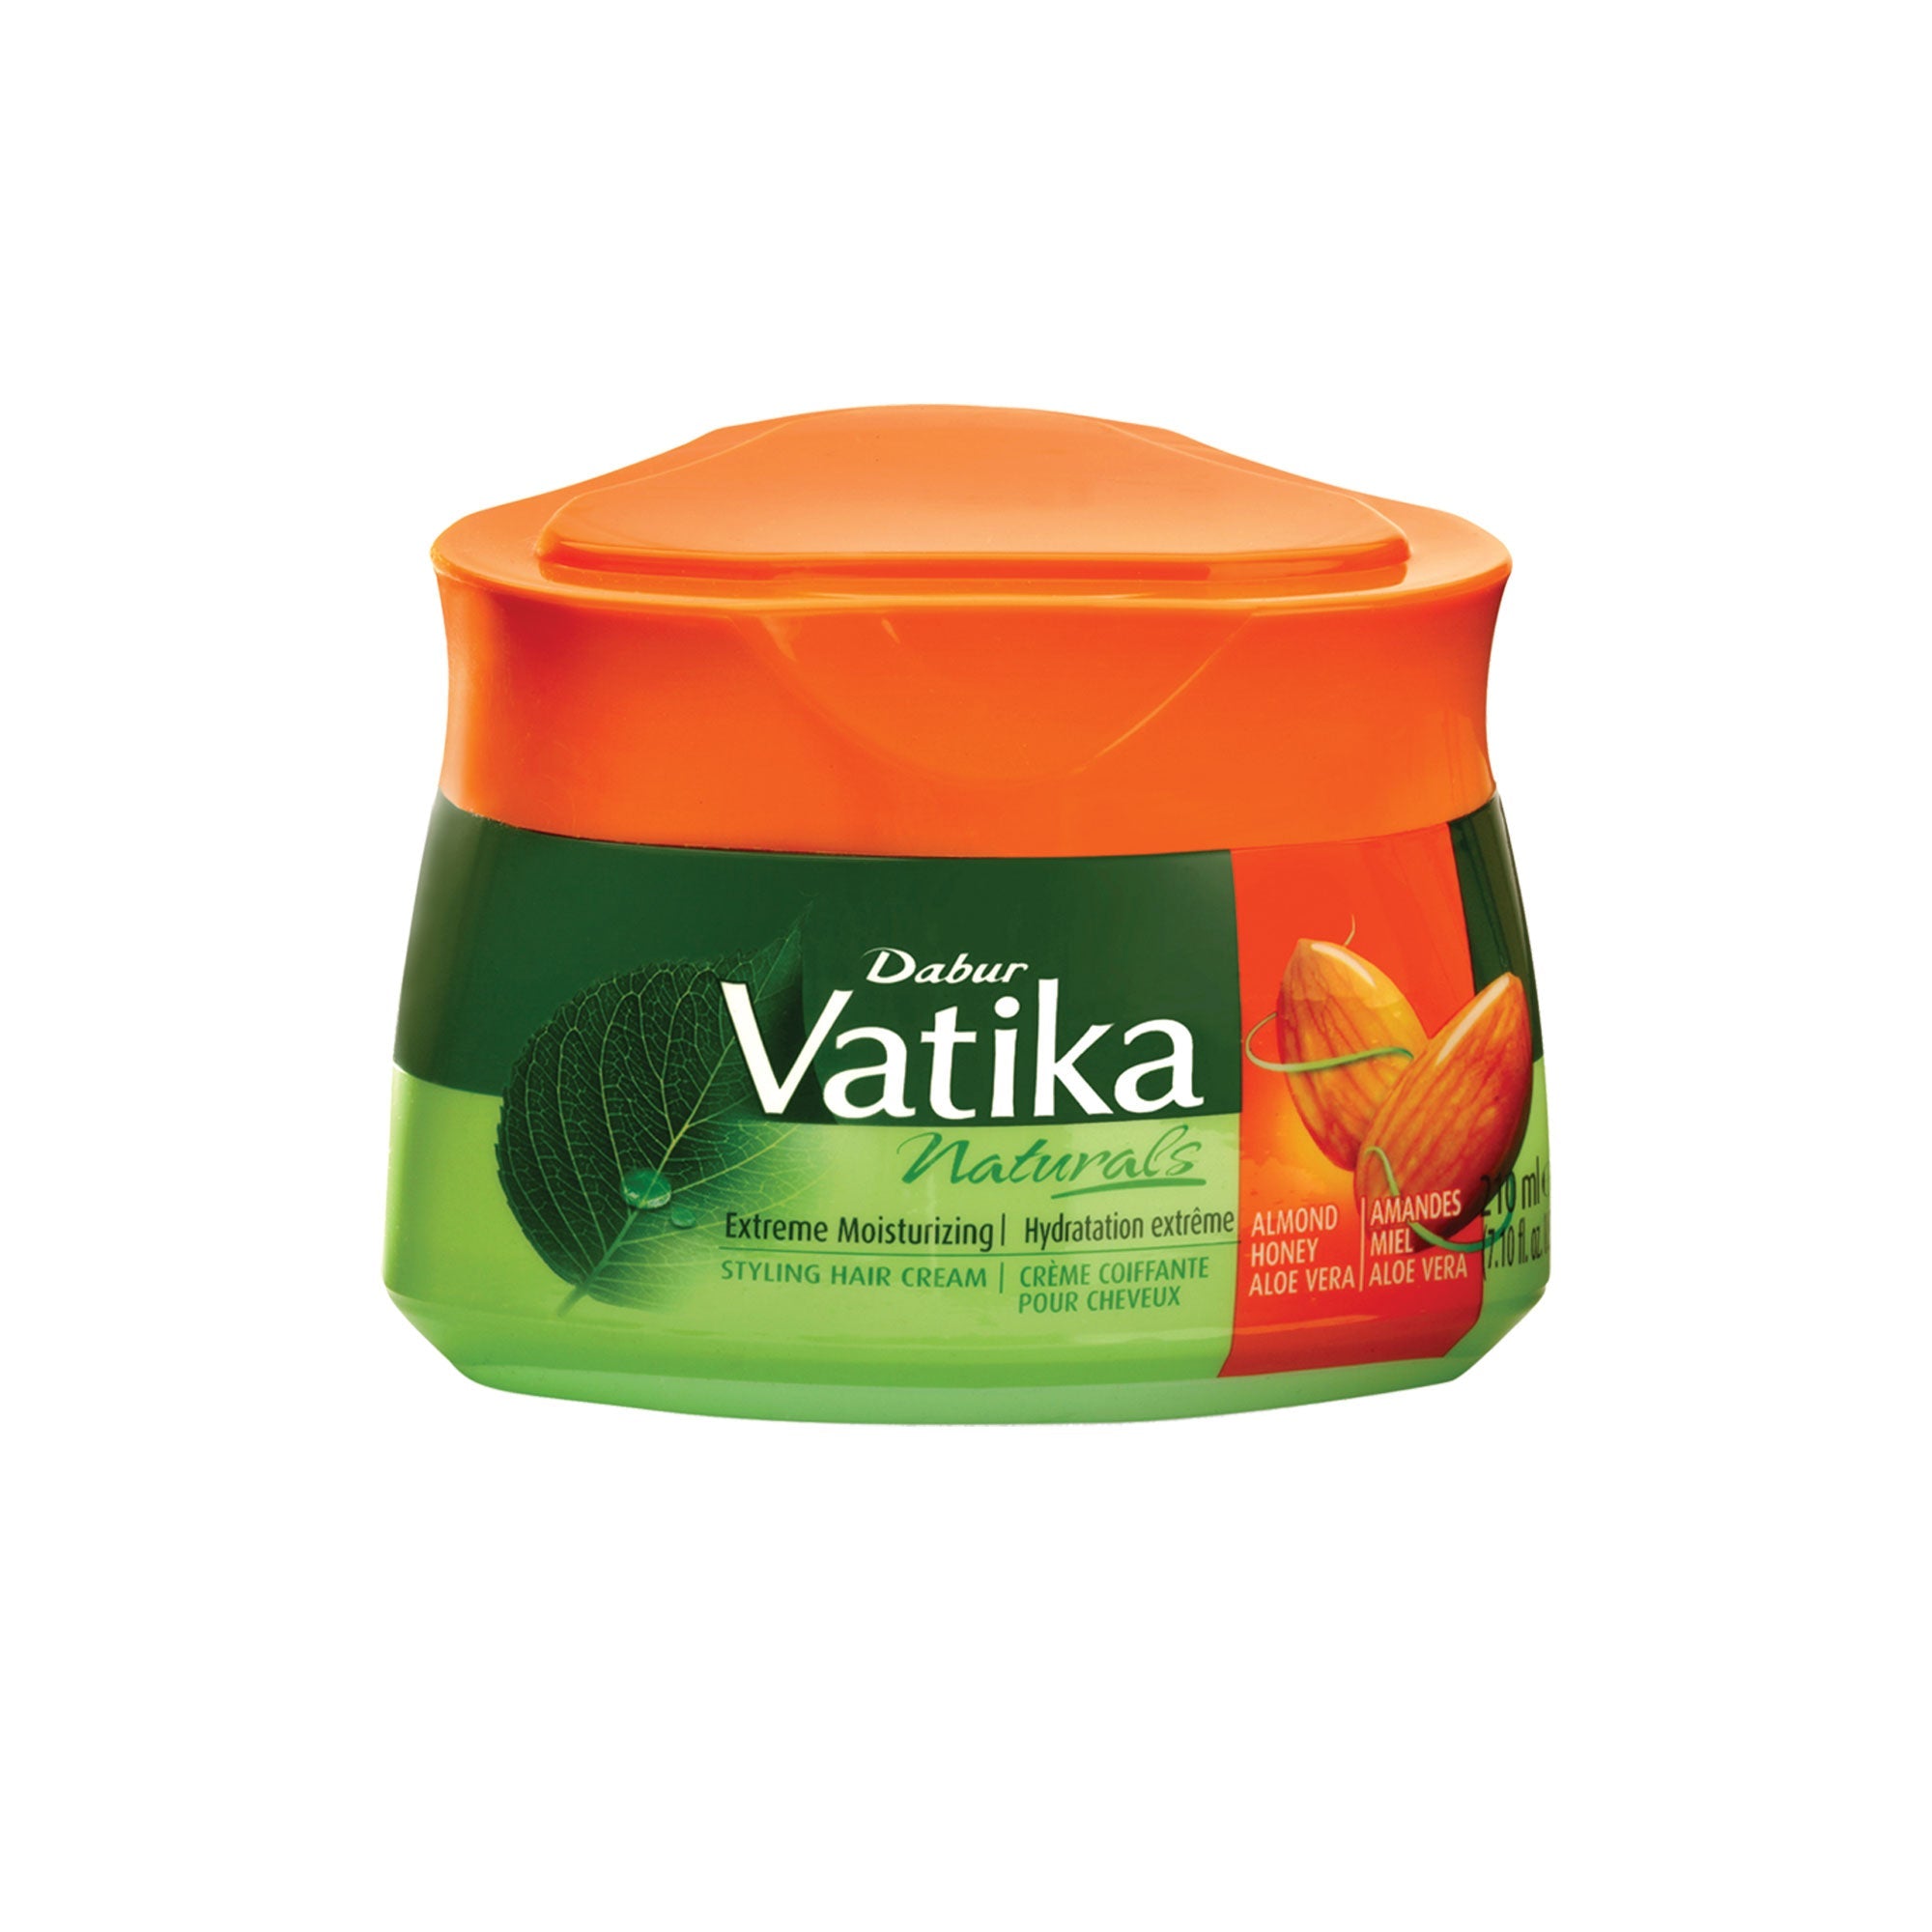 Vatika Naturals Extreme Moisturizing Styling Hair Cream